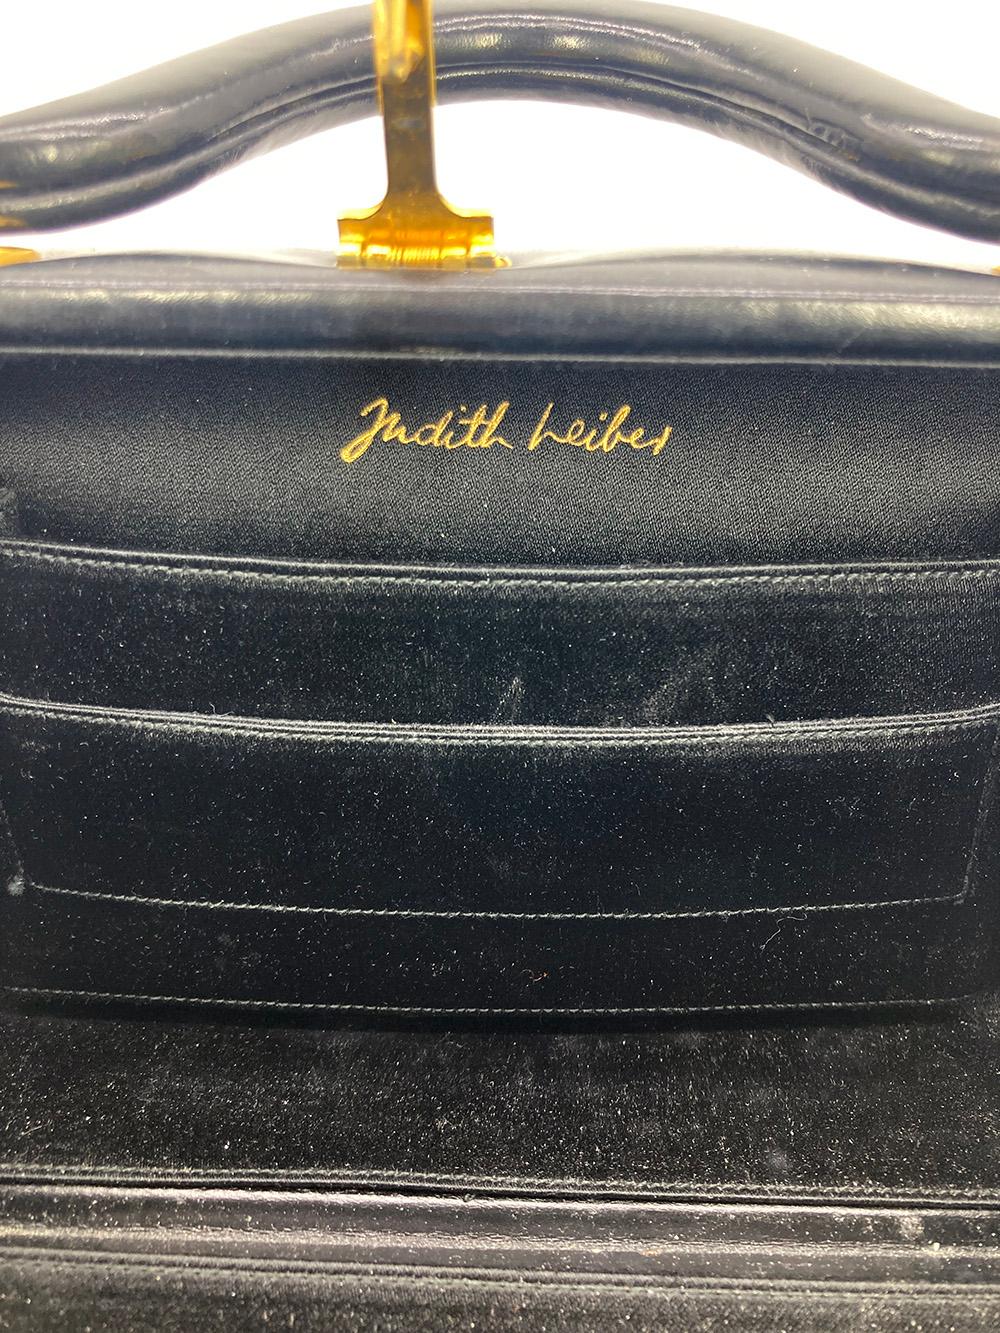 Judith Leiber Black Leather Box Handbag For Sale 10